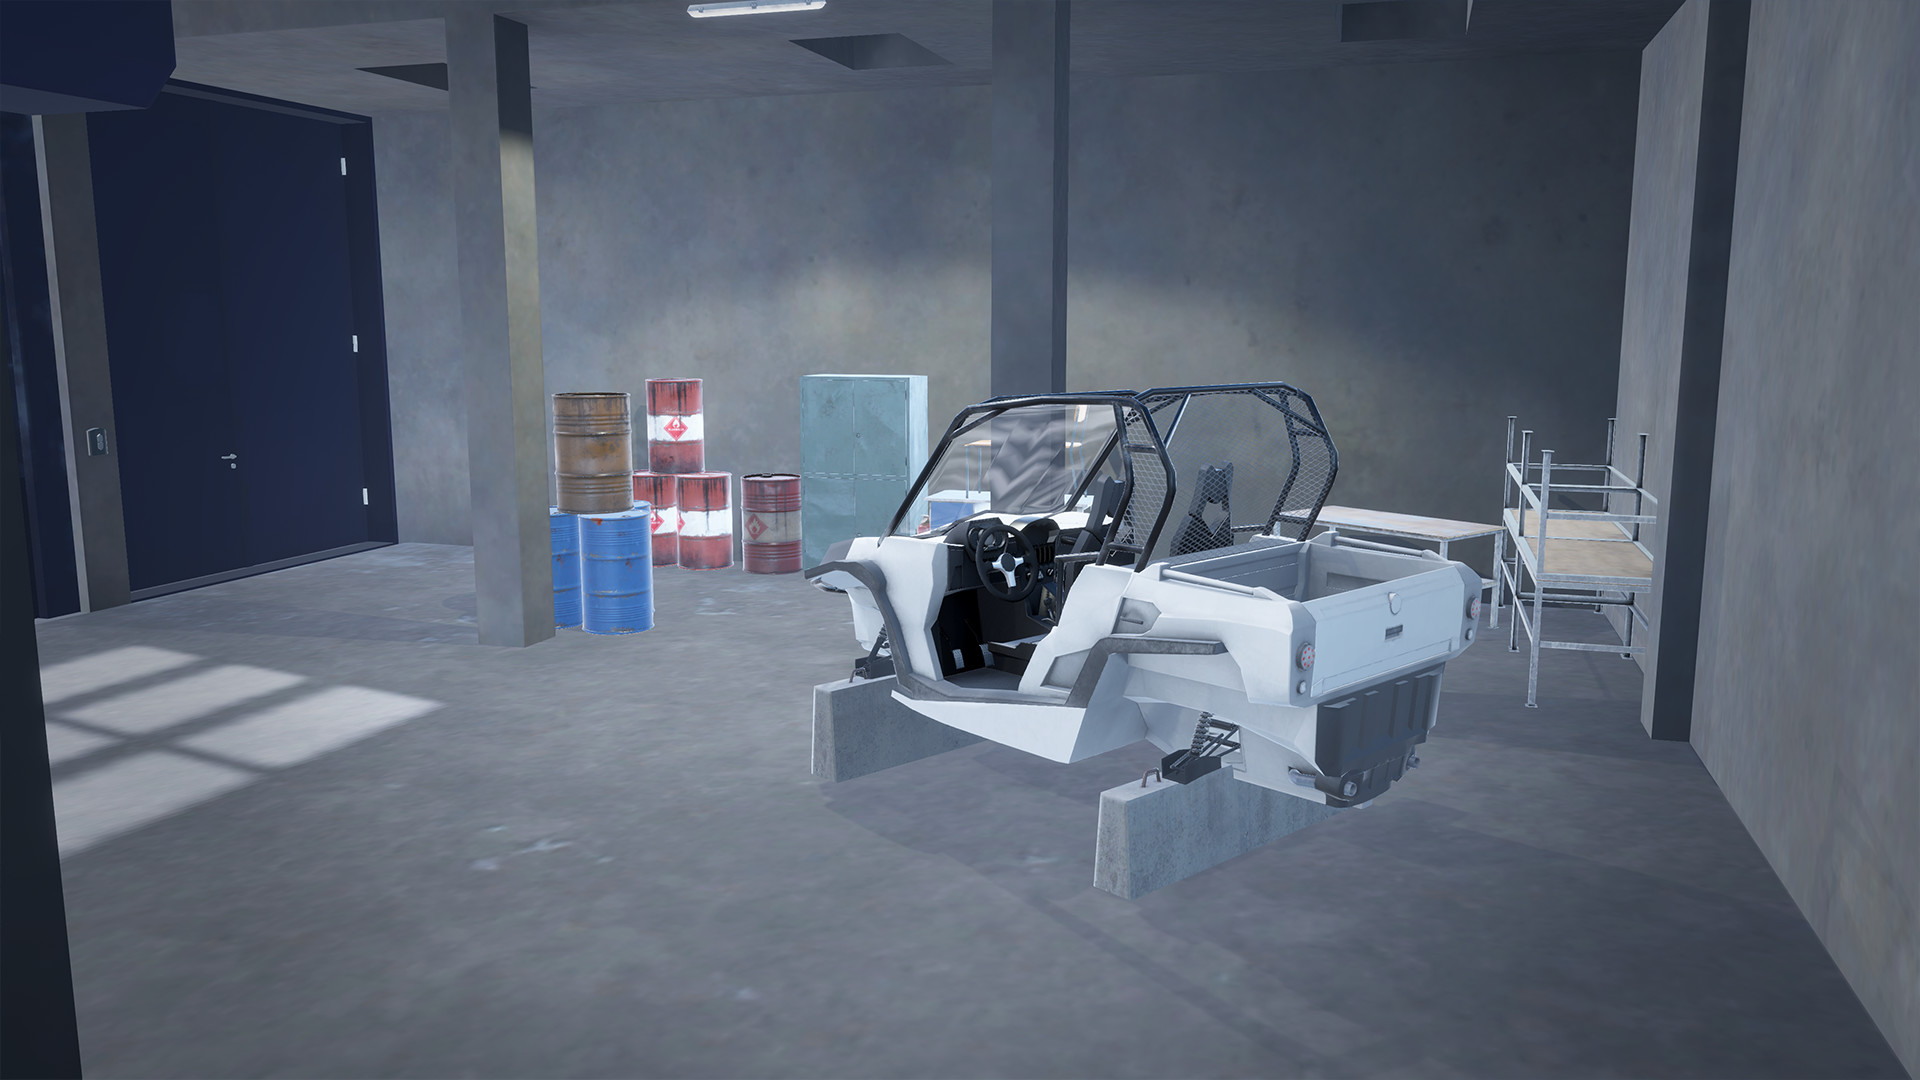 Alpine - The Simulation Game - screenshot 11